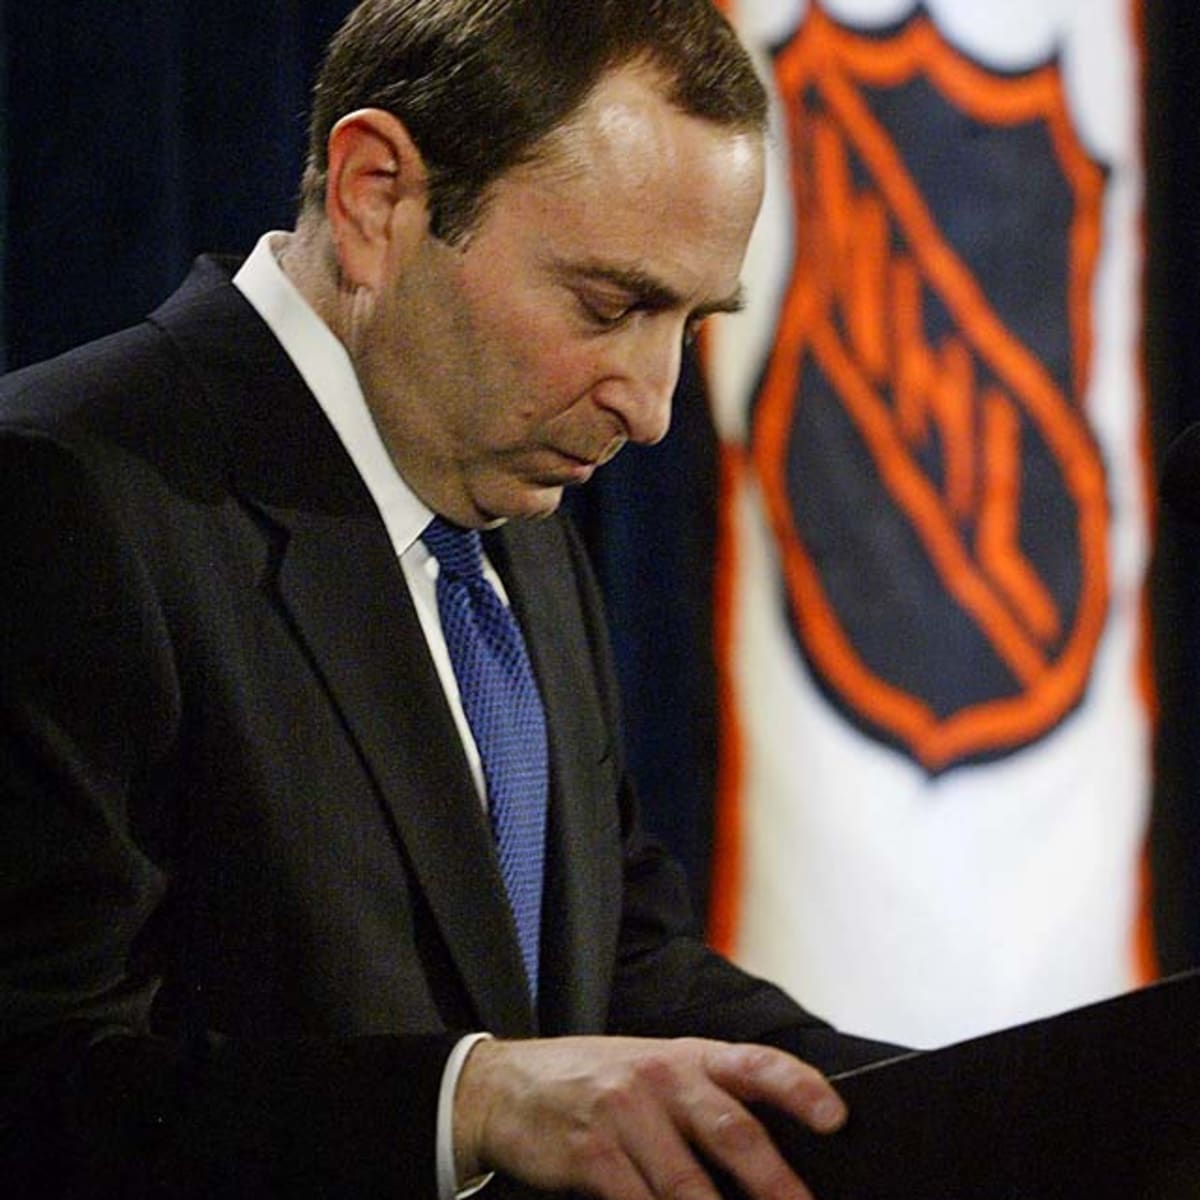 Collectors remember 2004-05 NHL lockout - Beckett News